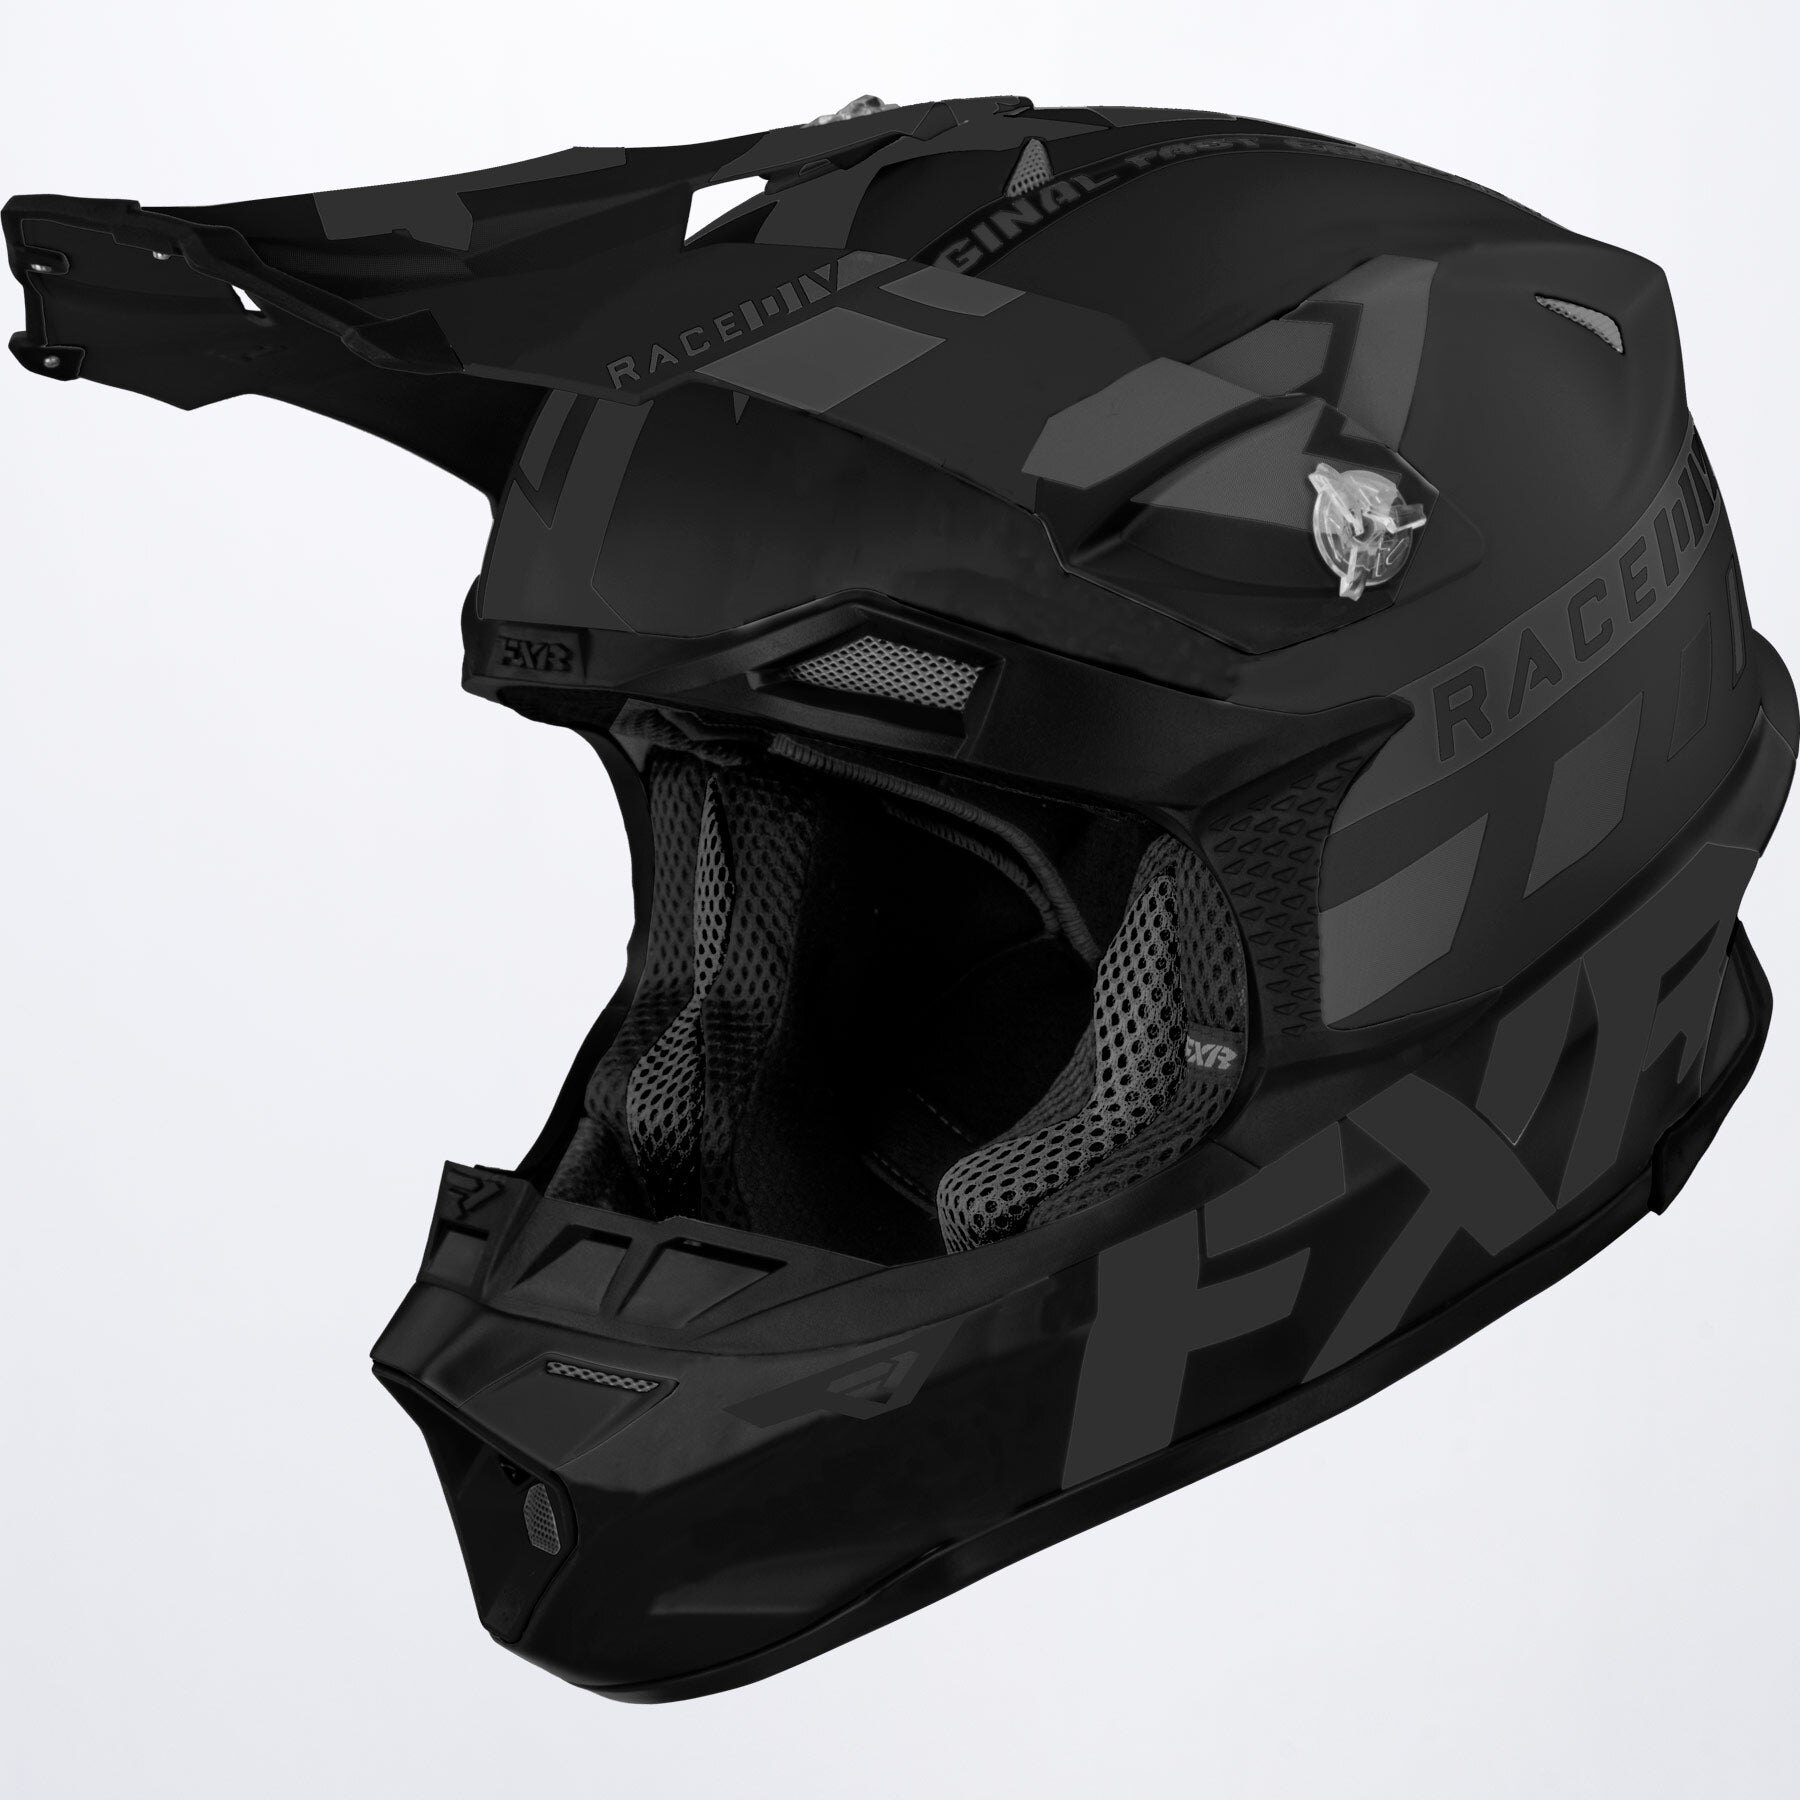 Blade Race Div Helmet XS Black Ops